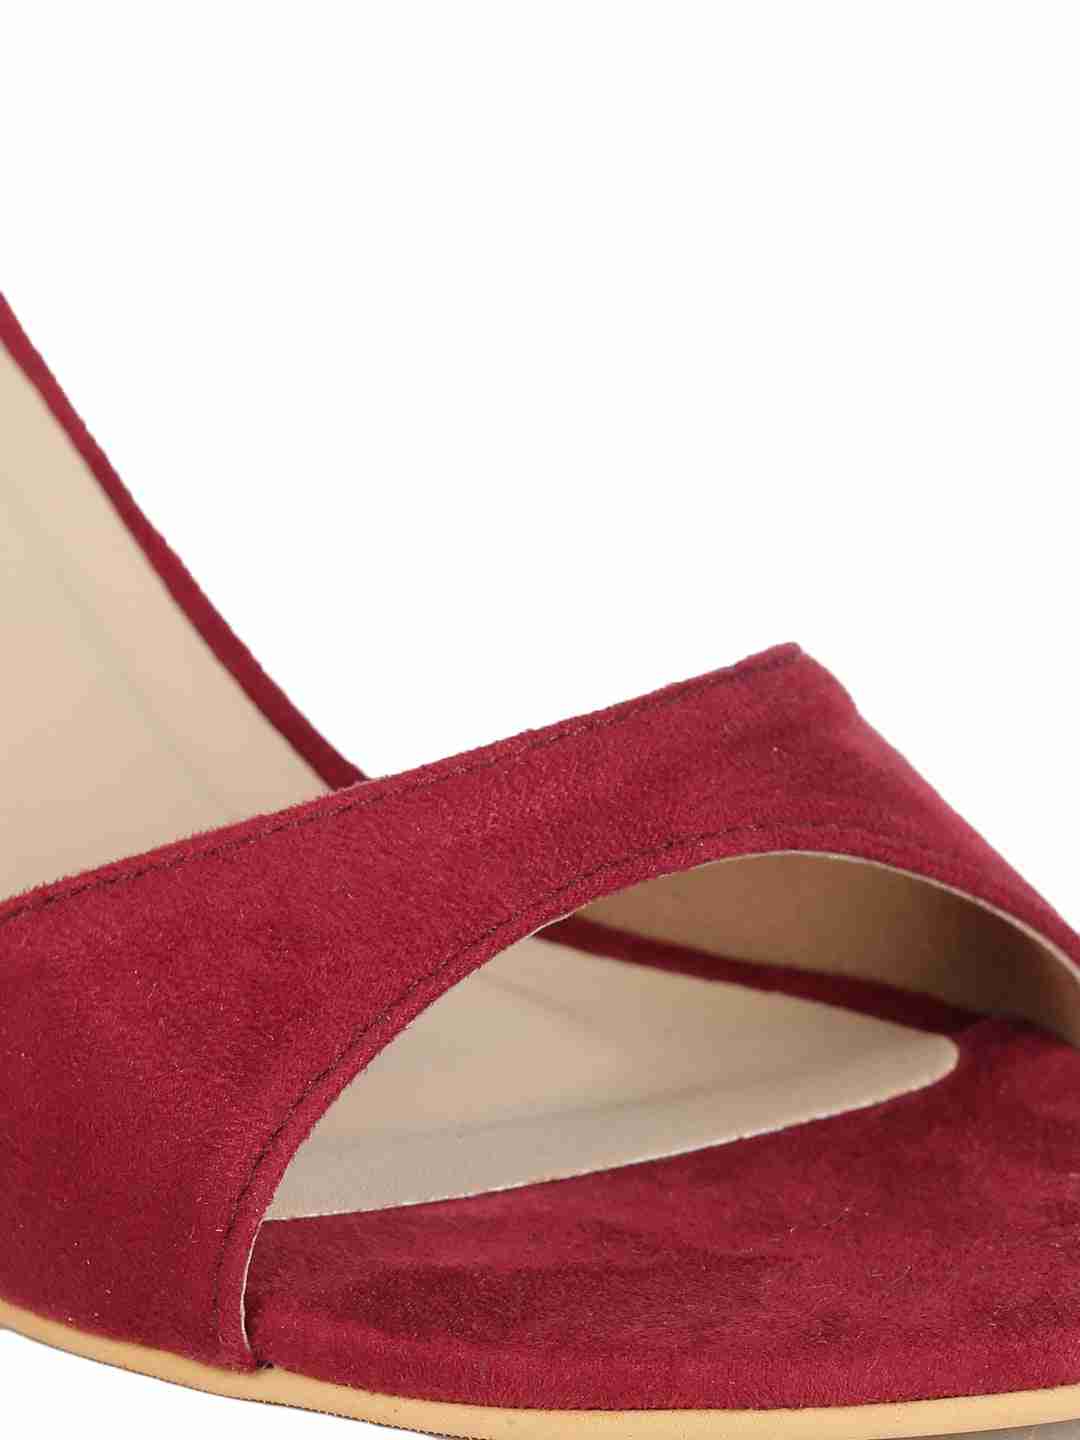 DSW Burgundy Shoes Sandals Black Heel New Size 7.5 | eBay